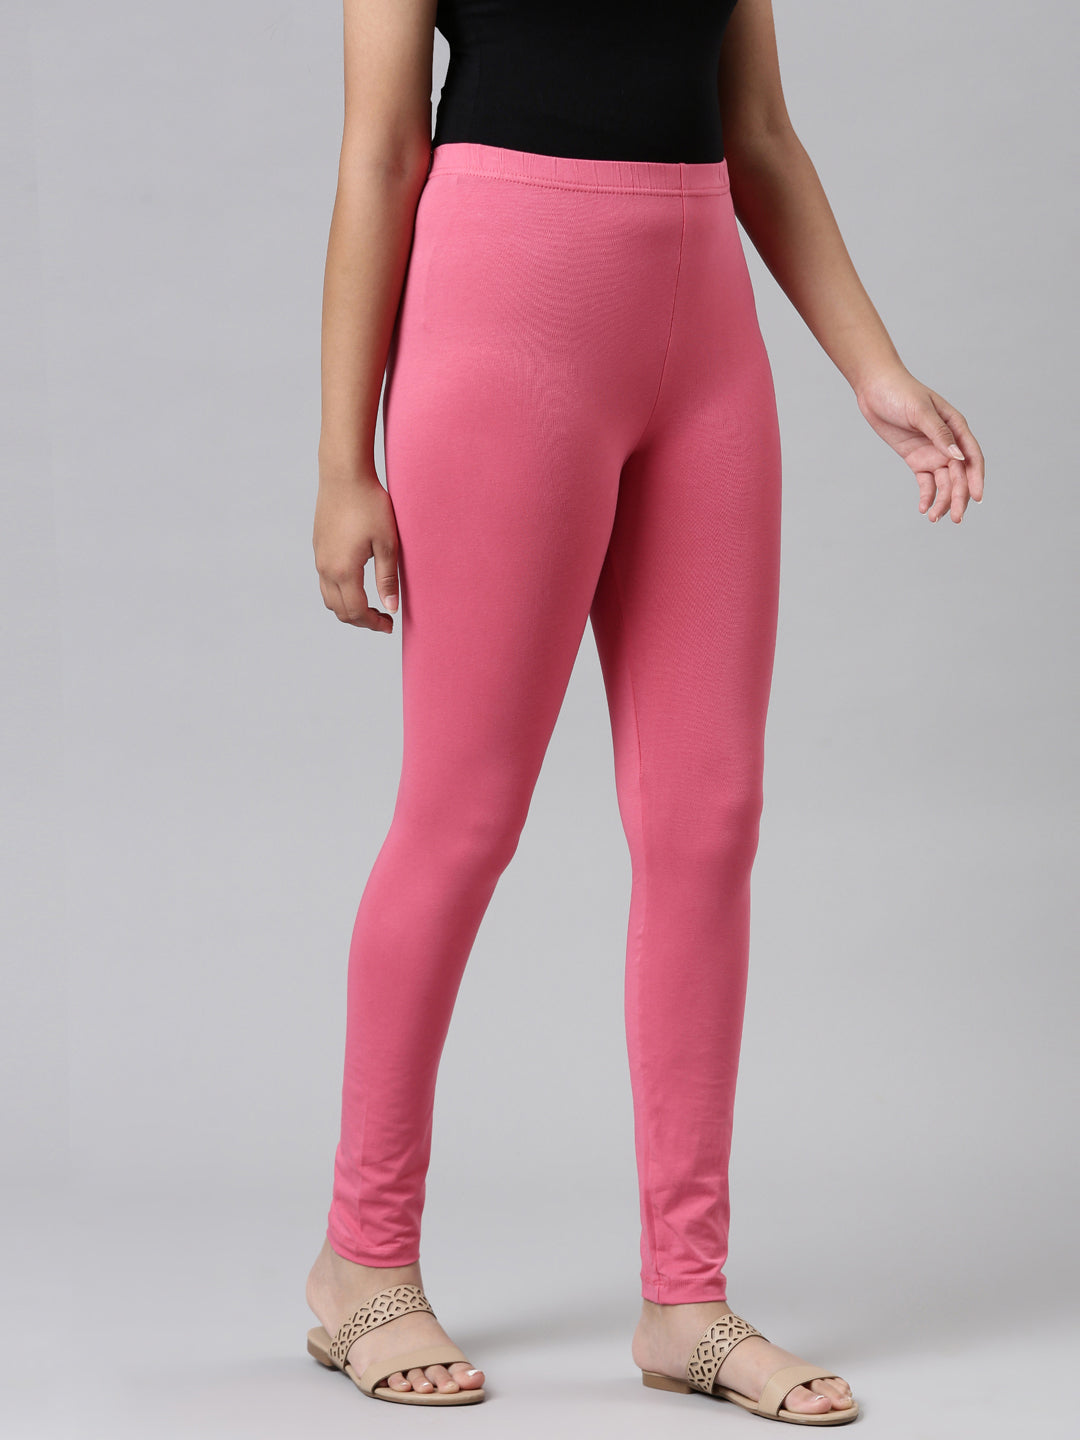 Buy Pinkloom Hot Pink Regular Fit Leggings for Women Online @ Tata CLiQ